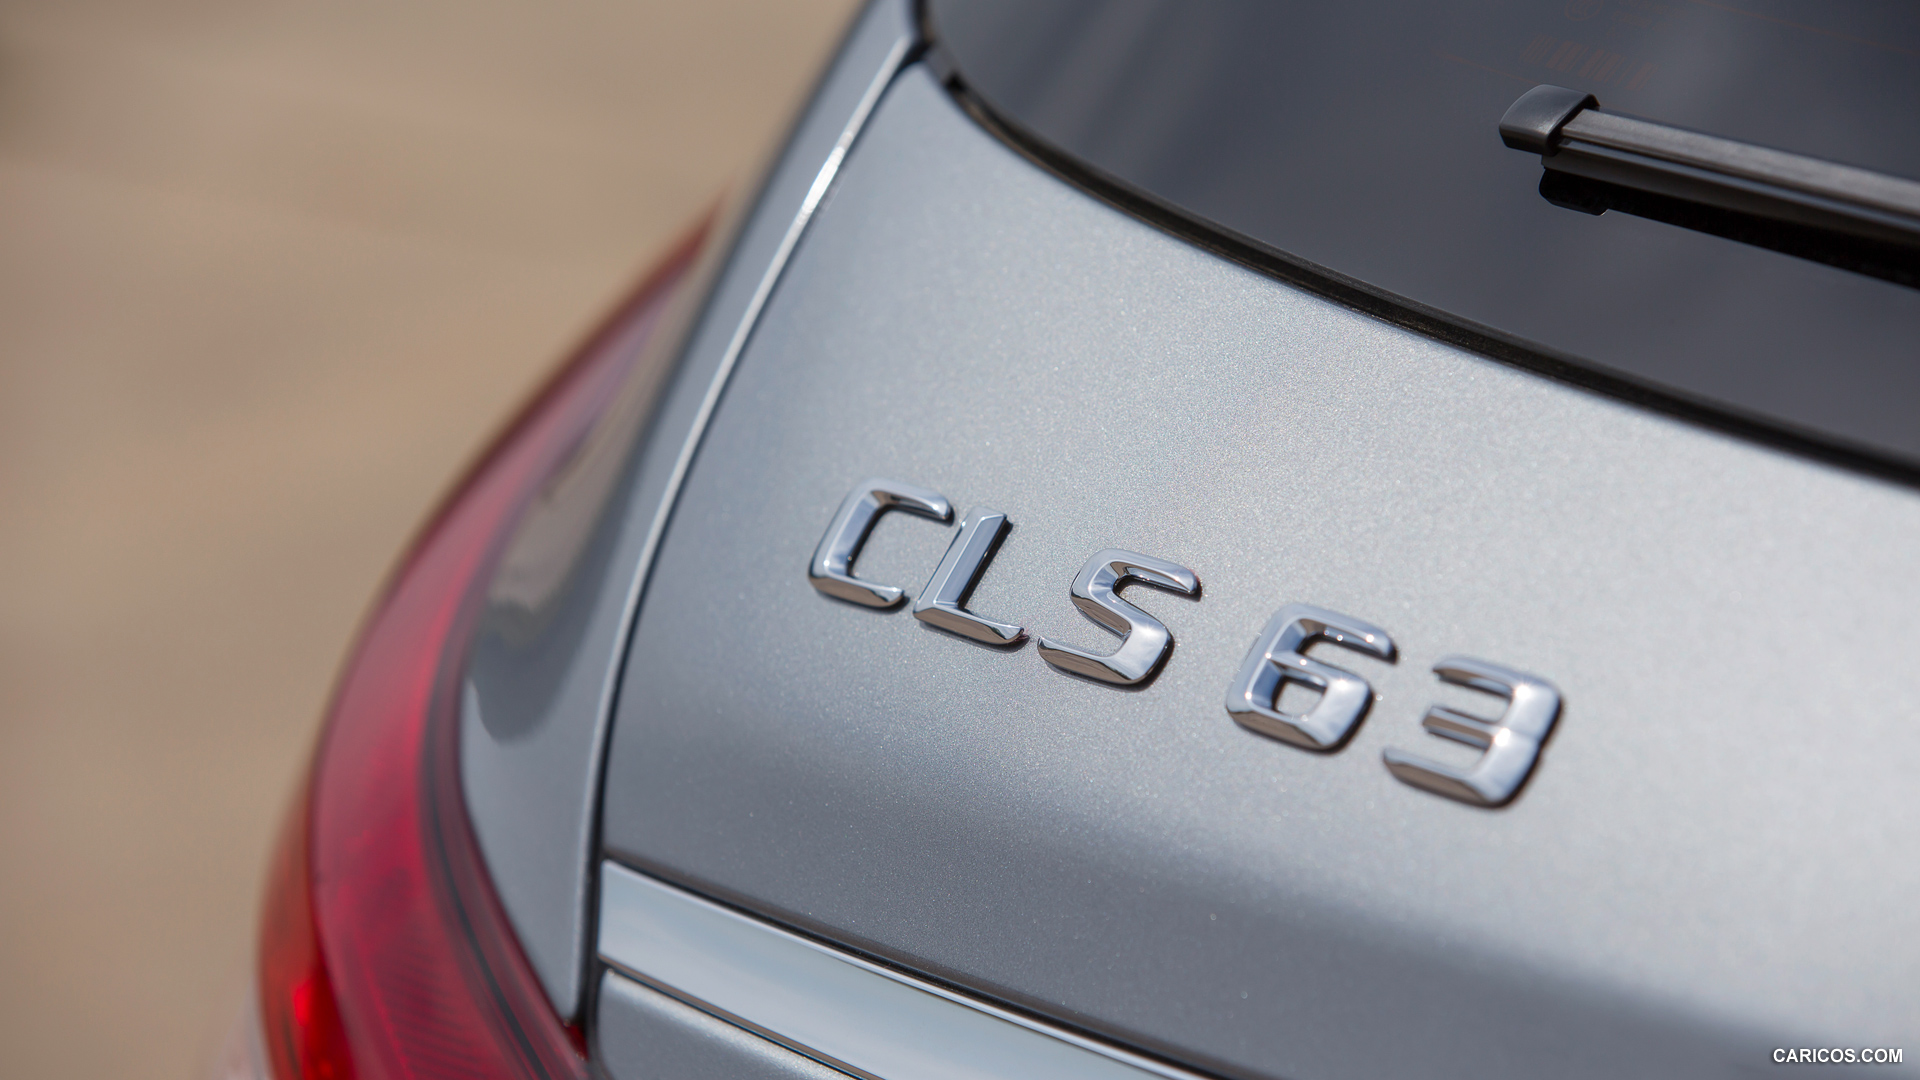 2015 Mercedes-Benz CLS 63 AMG Shooting Brake S-Model - Badge, #29 of 52